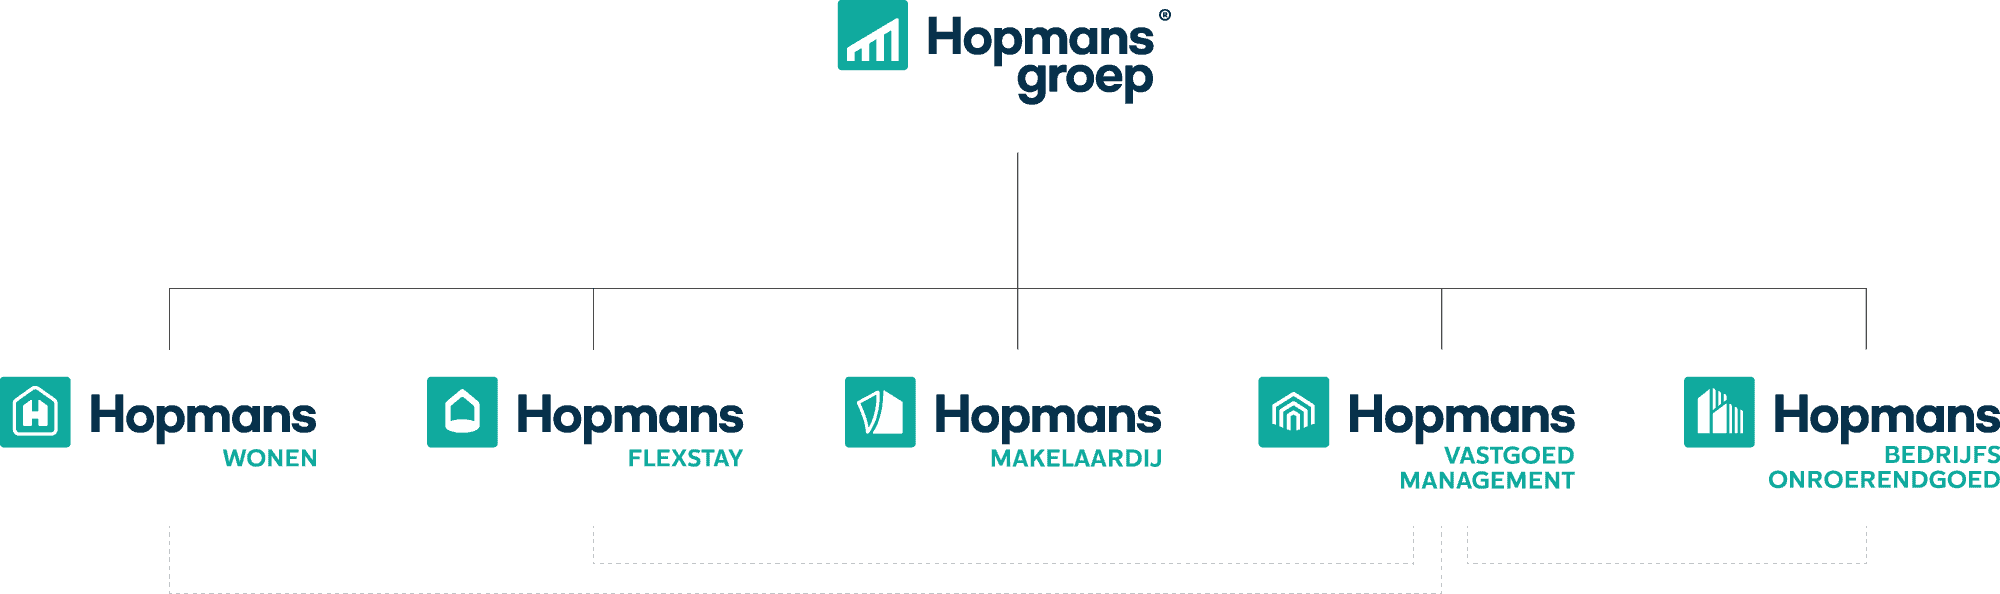 Hopmans Groep organigram 5